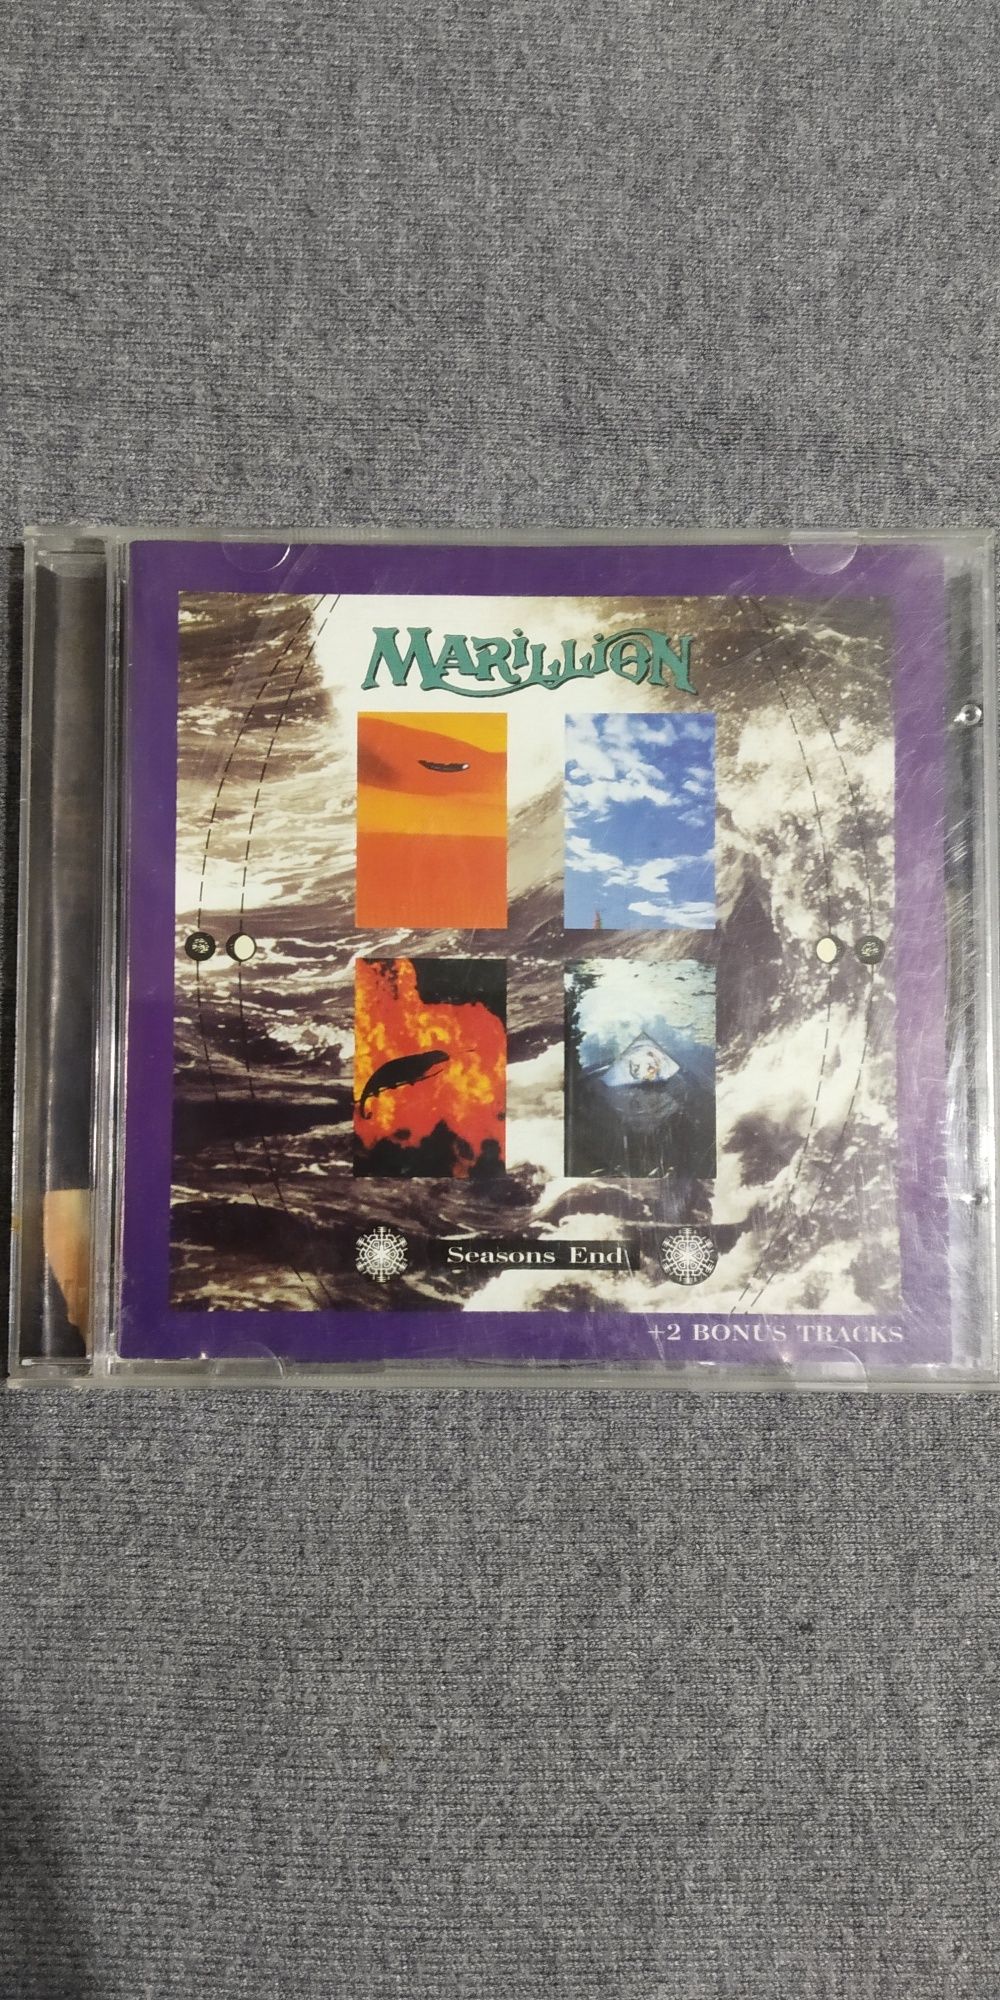 CD Marillion " Seasons end" 1989